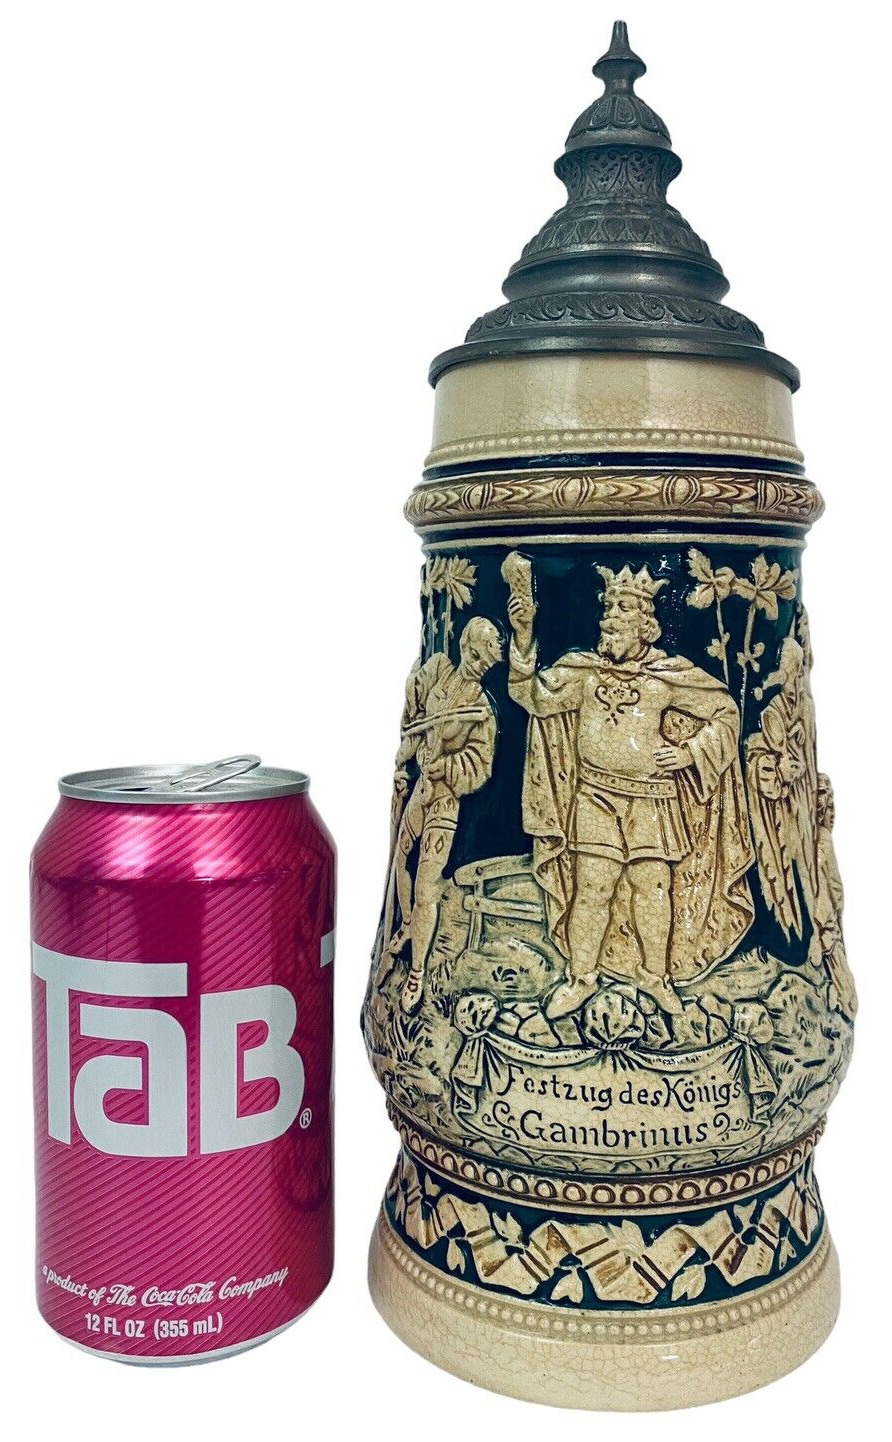 UNCATALOGED GIRMSCHEID ?? Antique German Beer Stein 1 Liter GAMBRINUS & revelers